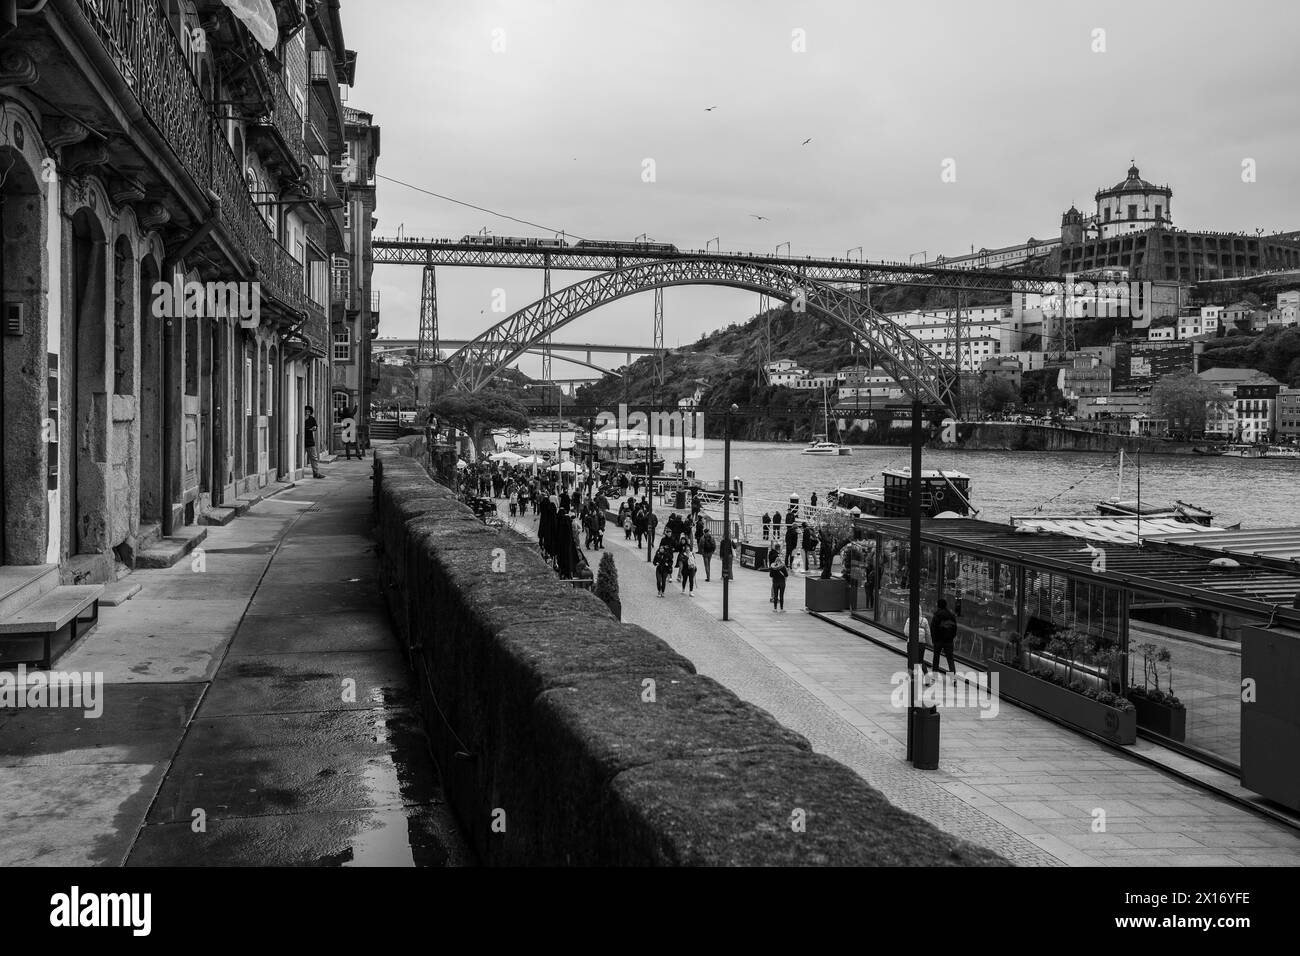 View of the Luis I Bridge, a double-deck metal arch bridge that spans the Douro River between the cities of Porto and Vila Nova de Gaia, April 15, 202 Stock Photo